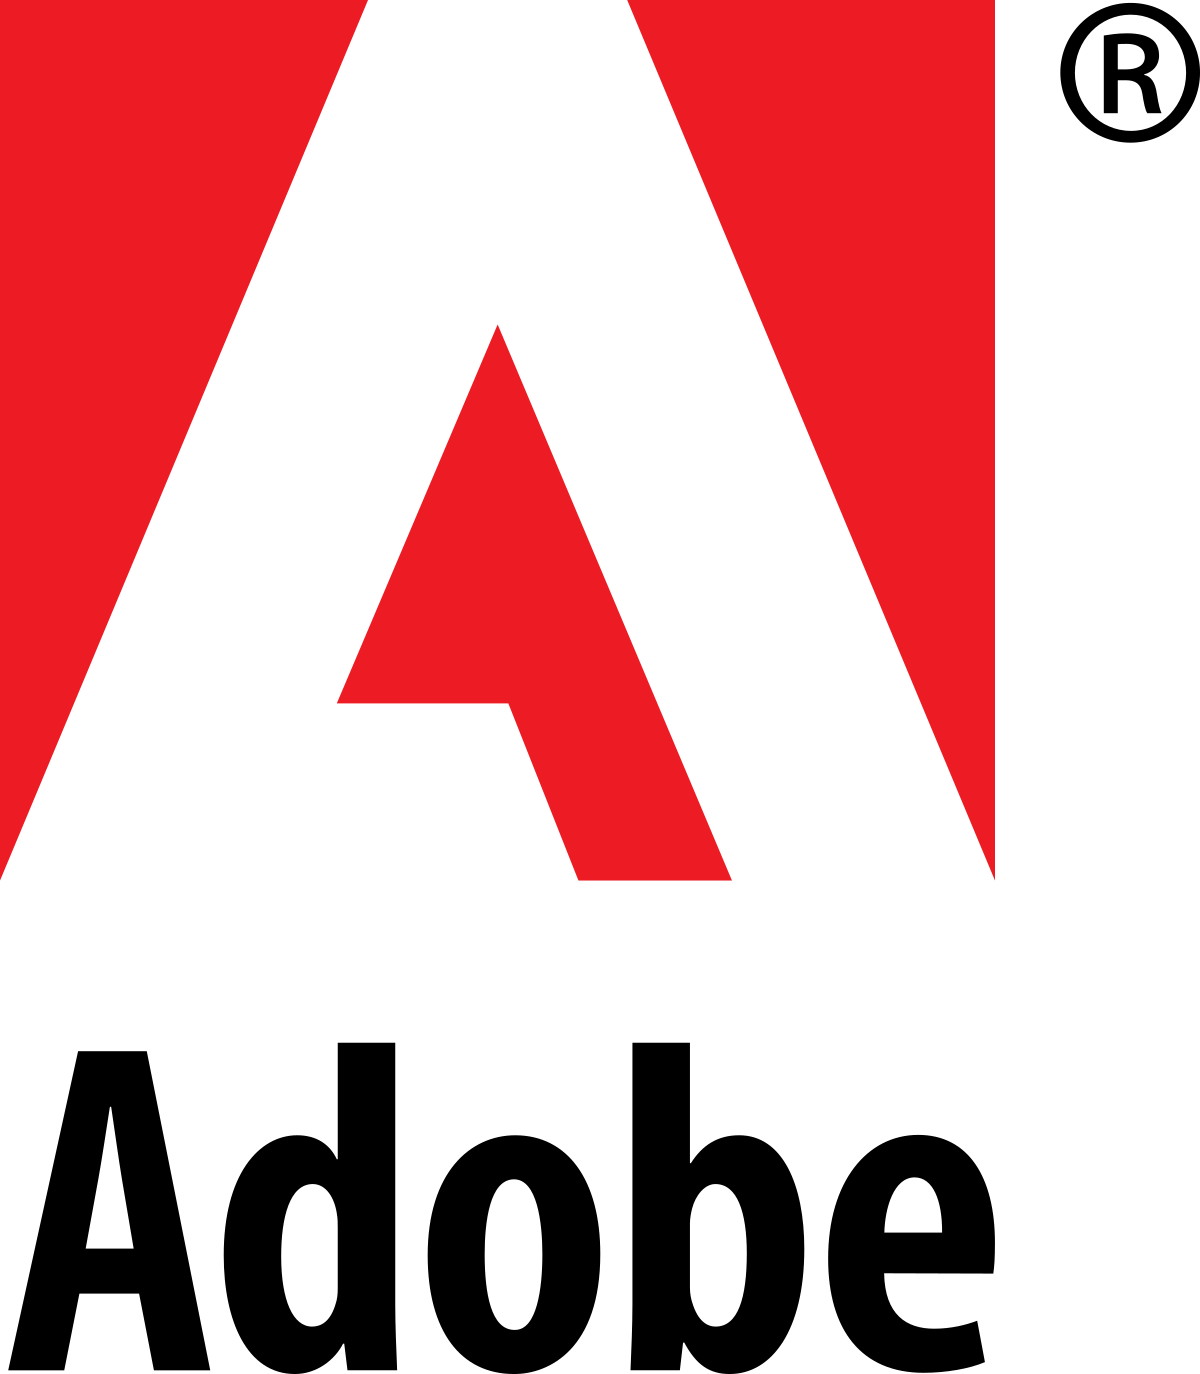 adobe systems logo and wordmark